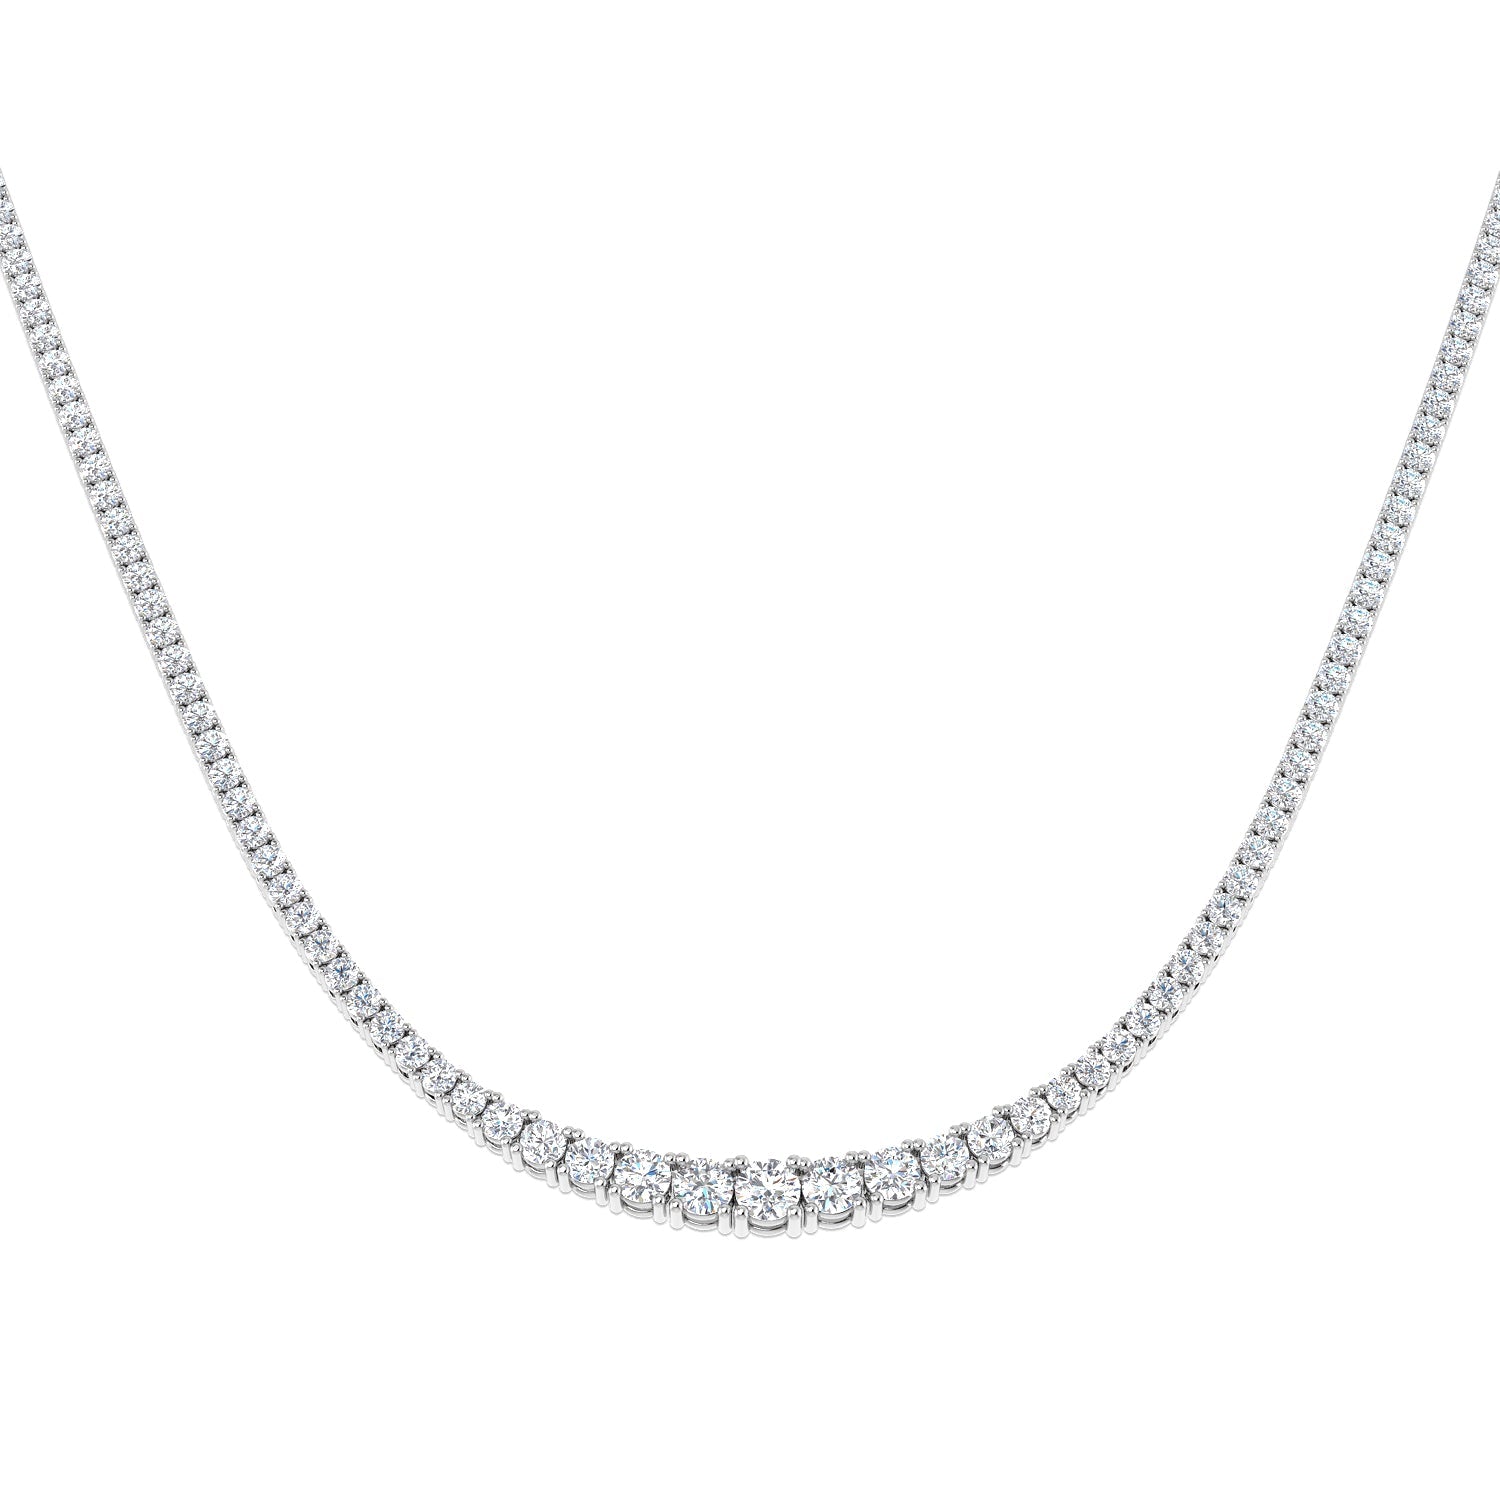 Graduated Diamond Tennis Necklace 24.80ct G/SI Quality 18k White Gold - All Diamond